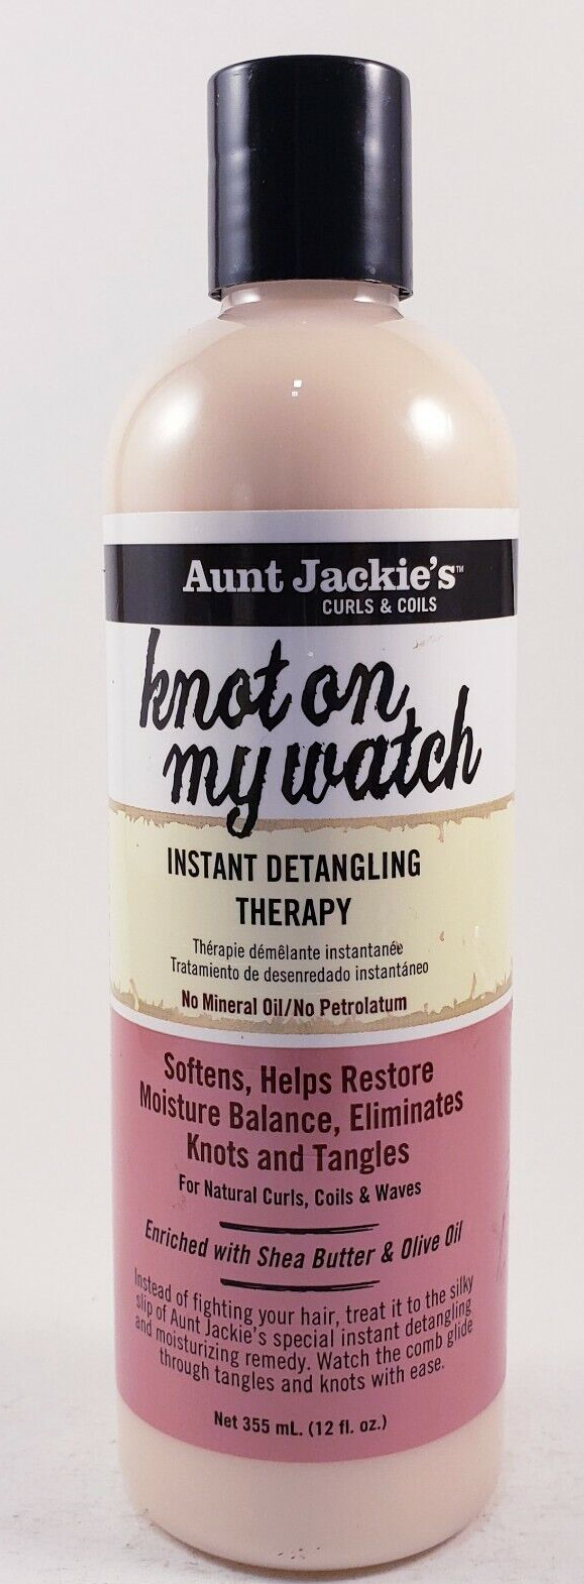 Aunt Jackie’s Knot on My Watch Detangler